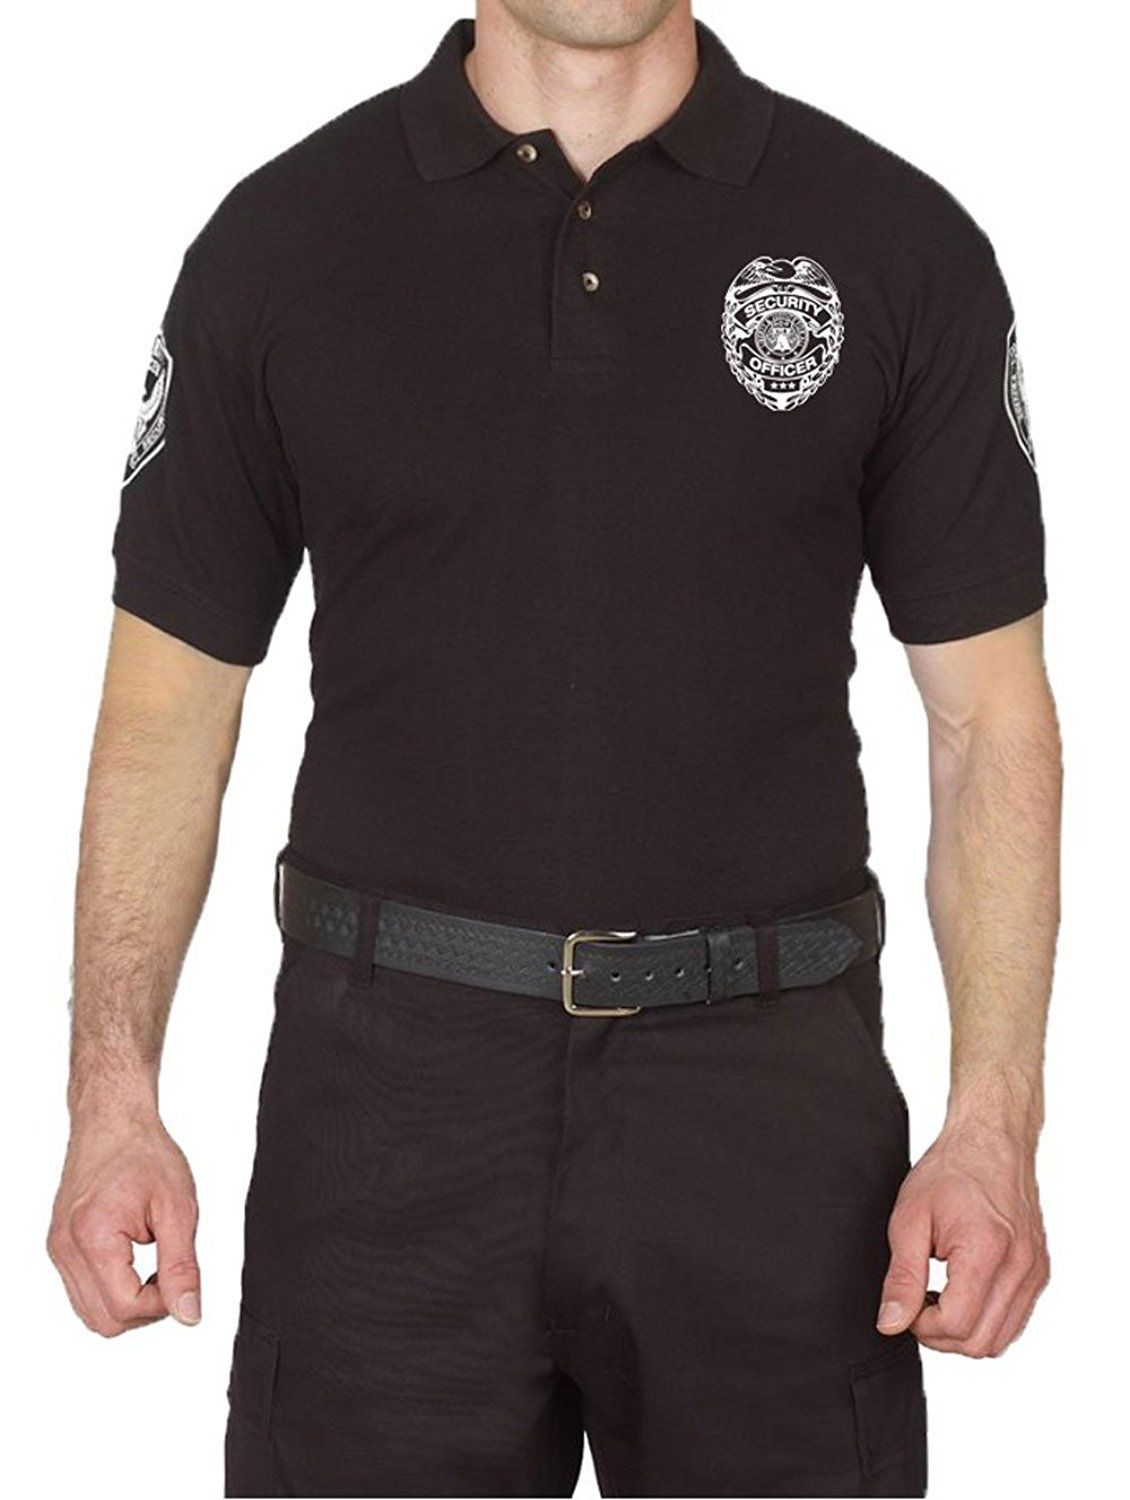 Security Badge Polo Shirt